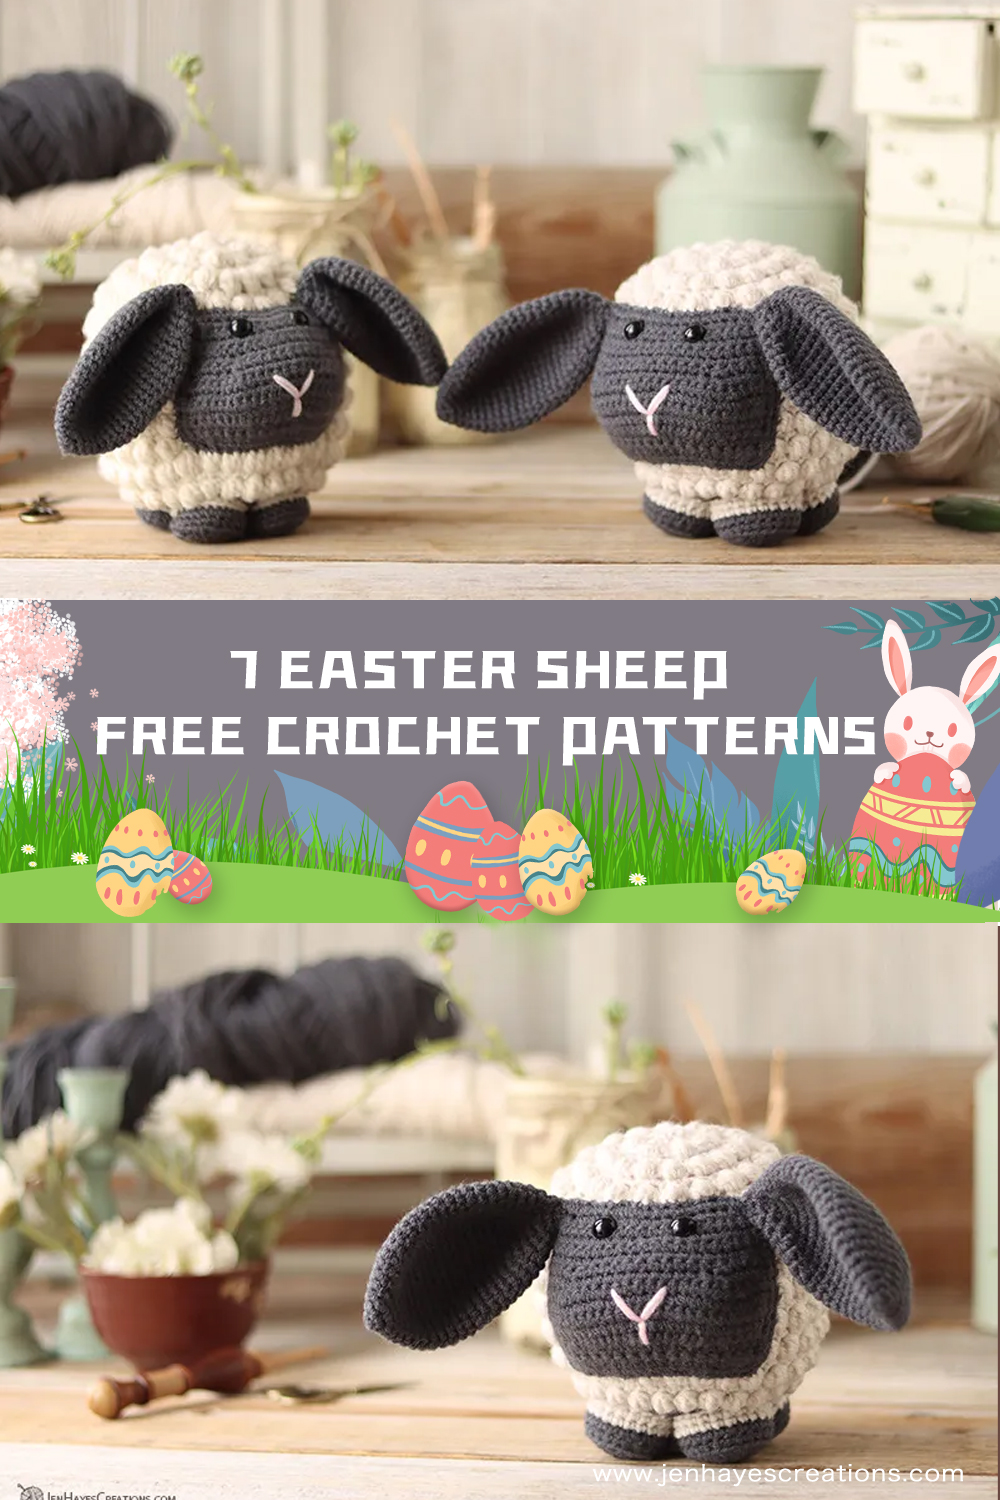 7 Crochet Easter Sheep FREE Patterns